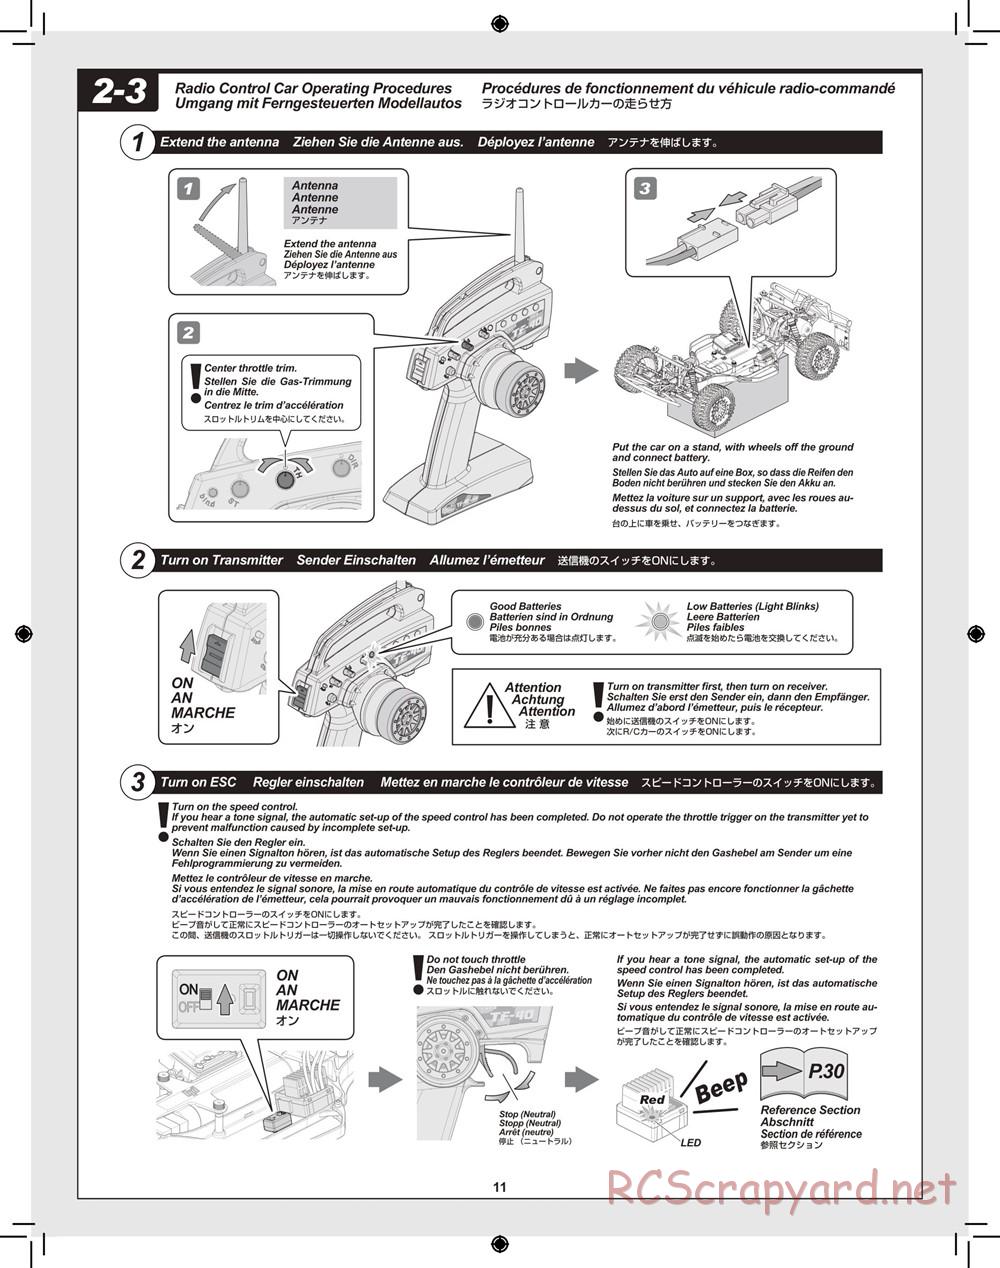 HPI - Blitz Waterproof - Manual - Page 11